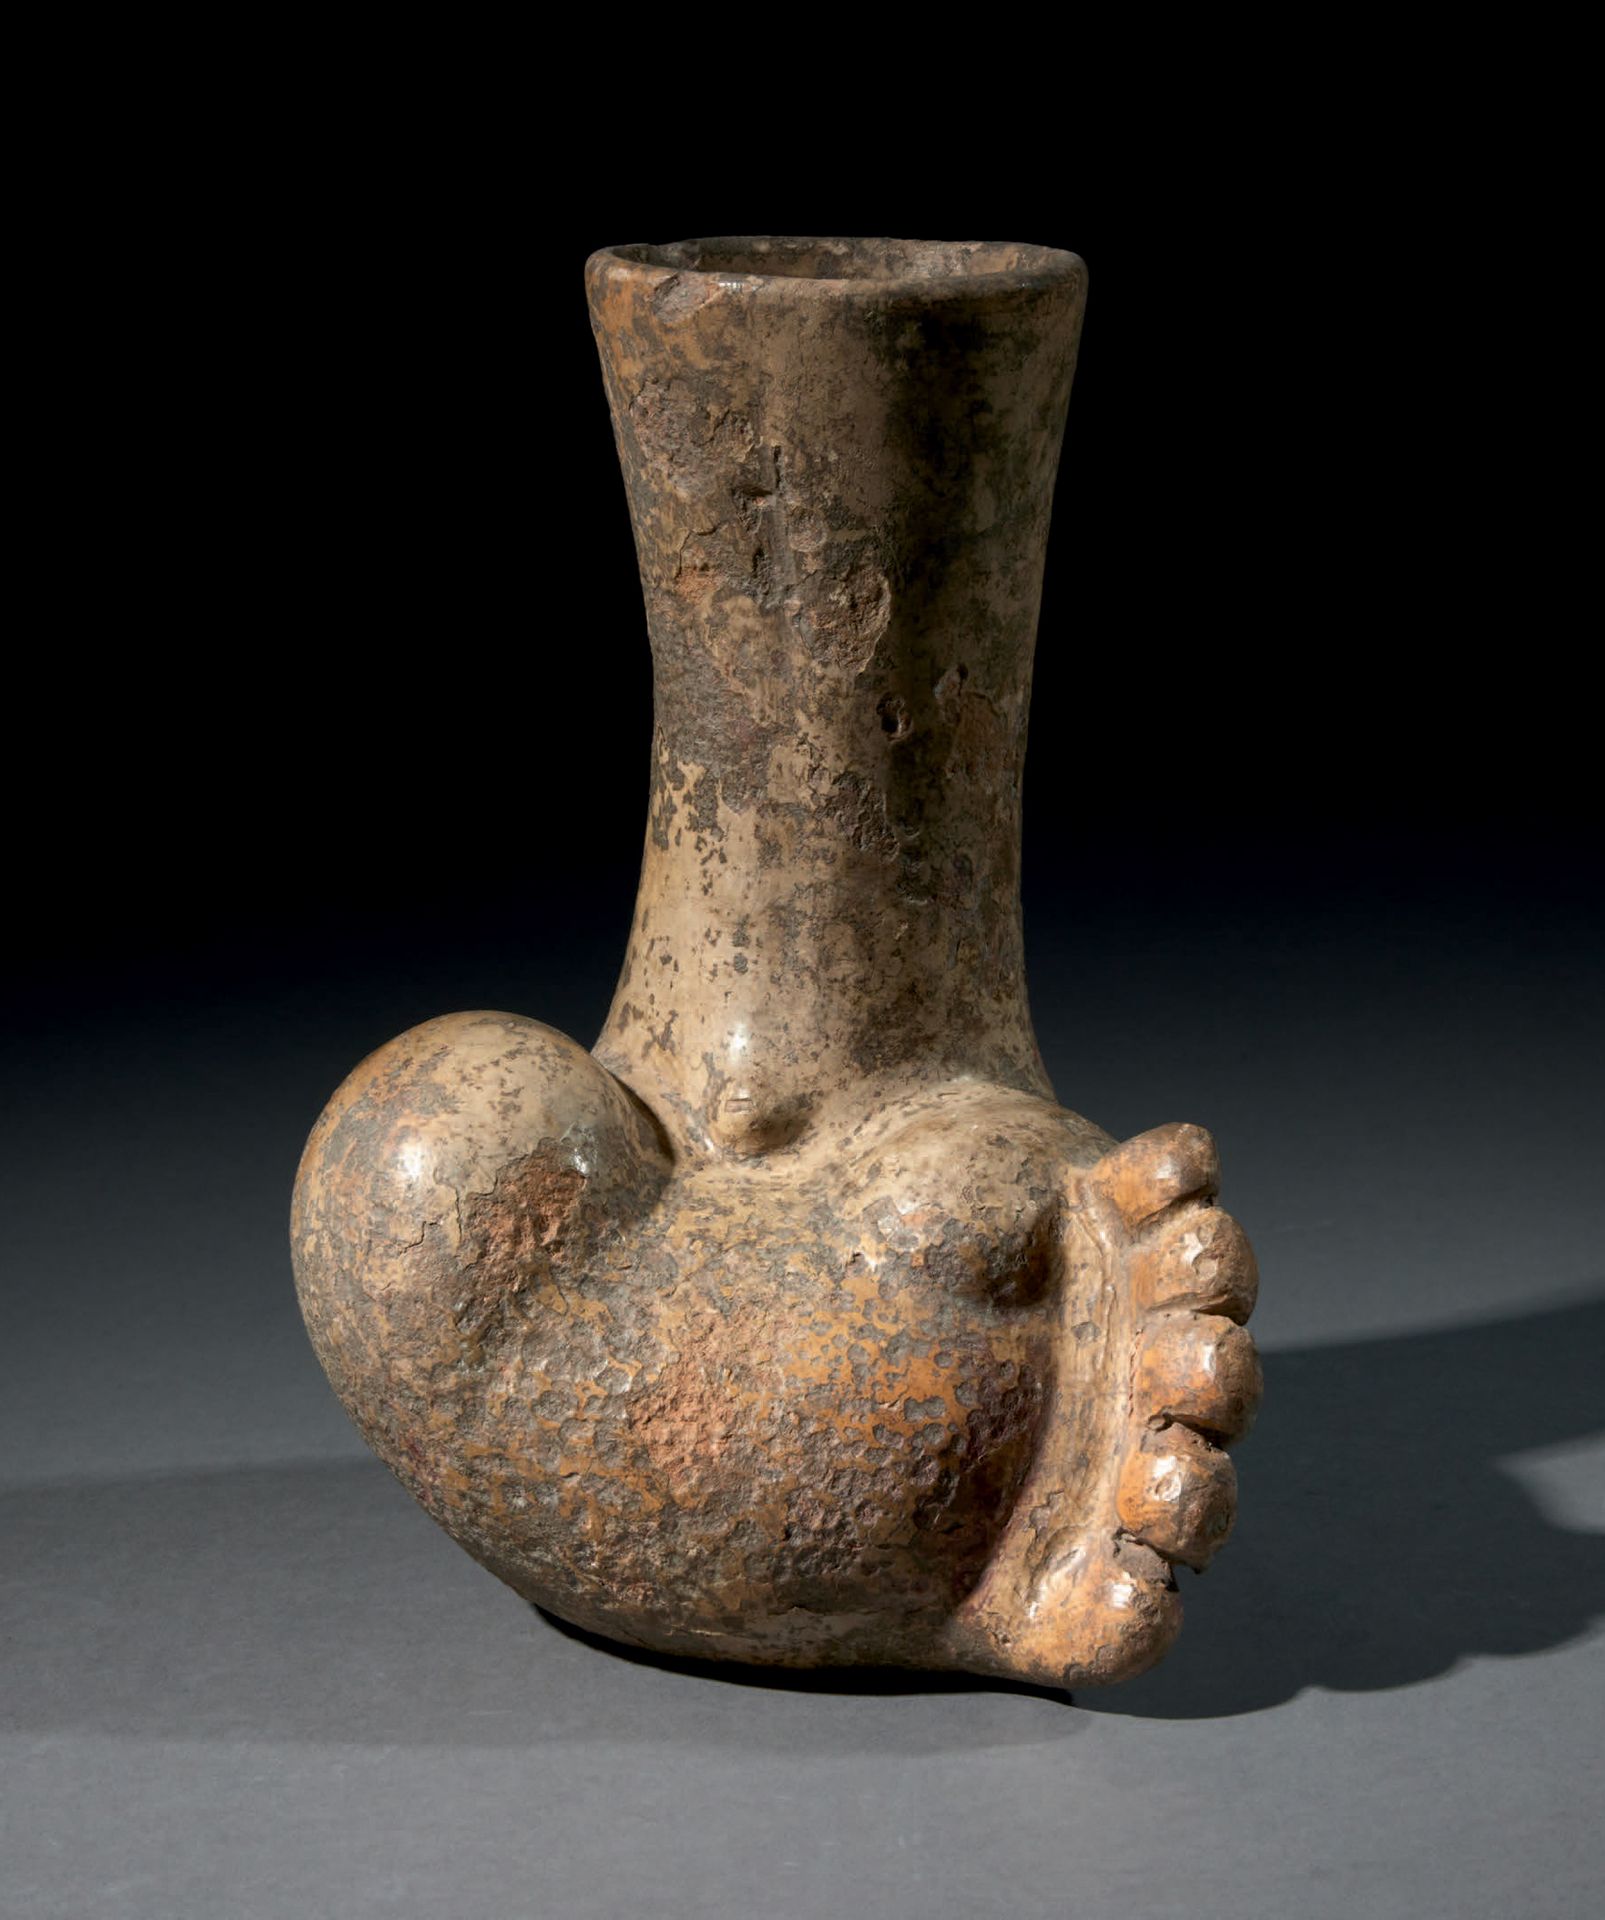 Null 脚形花瓶
OLMEC文化，墨西哥LAS BOCAS
前中期，公元前900-400年
陶瓷
高20.5厘米
出处：
- 前Guy Joussemet收藏&hellip;